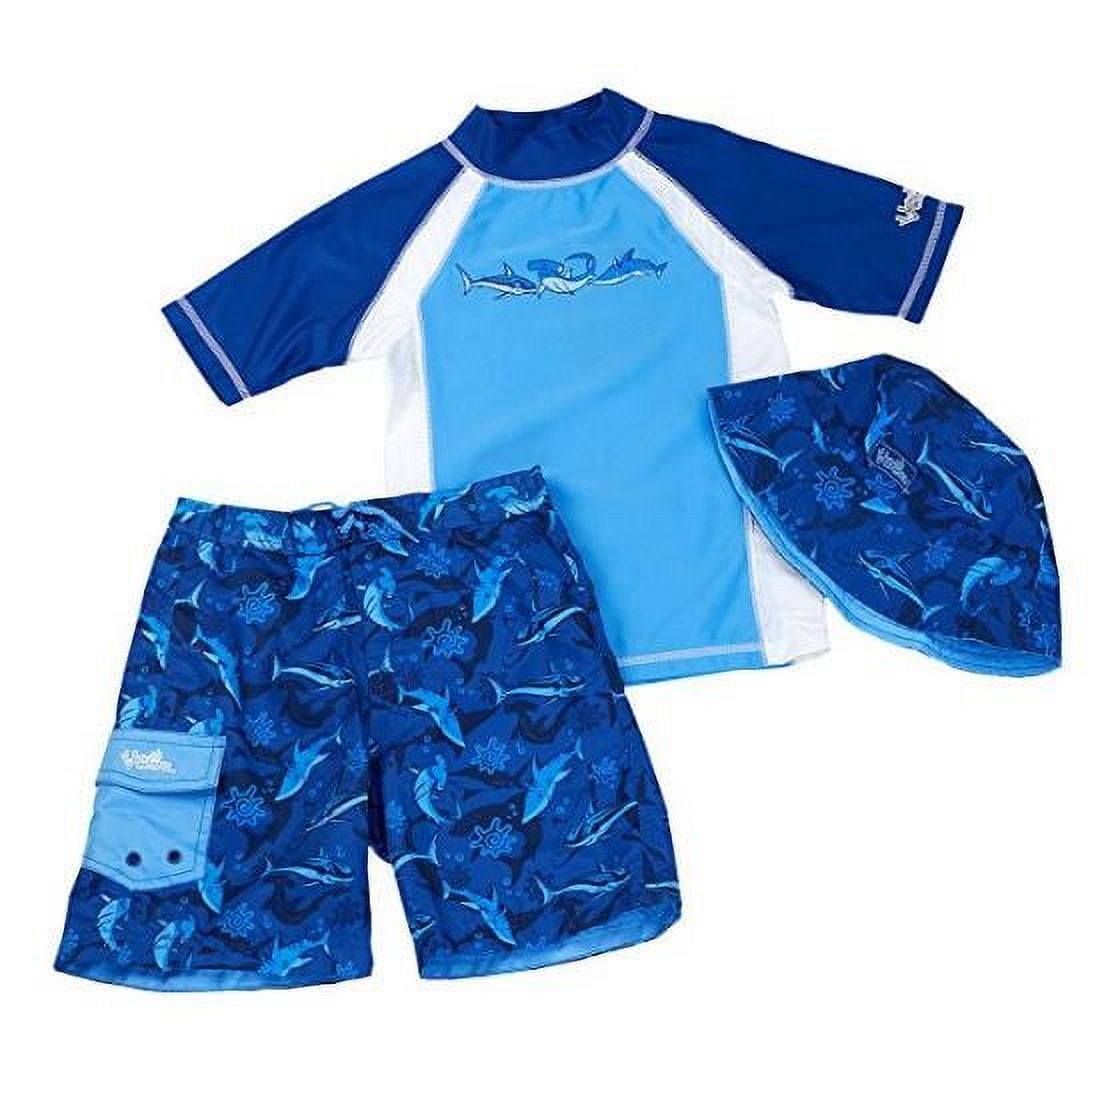 UV SKINZ Little Boys 3 Piece Rashguard Swimsuit Set (Shark Tank, 6